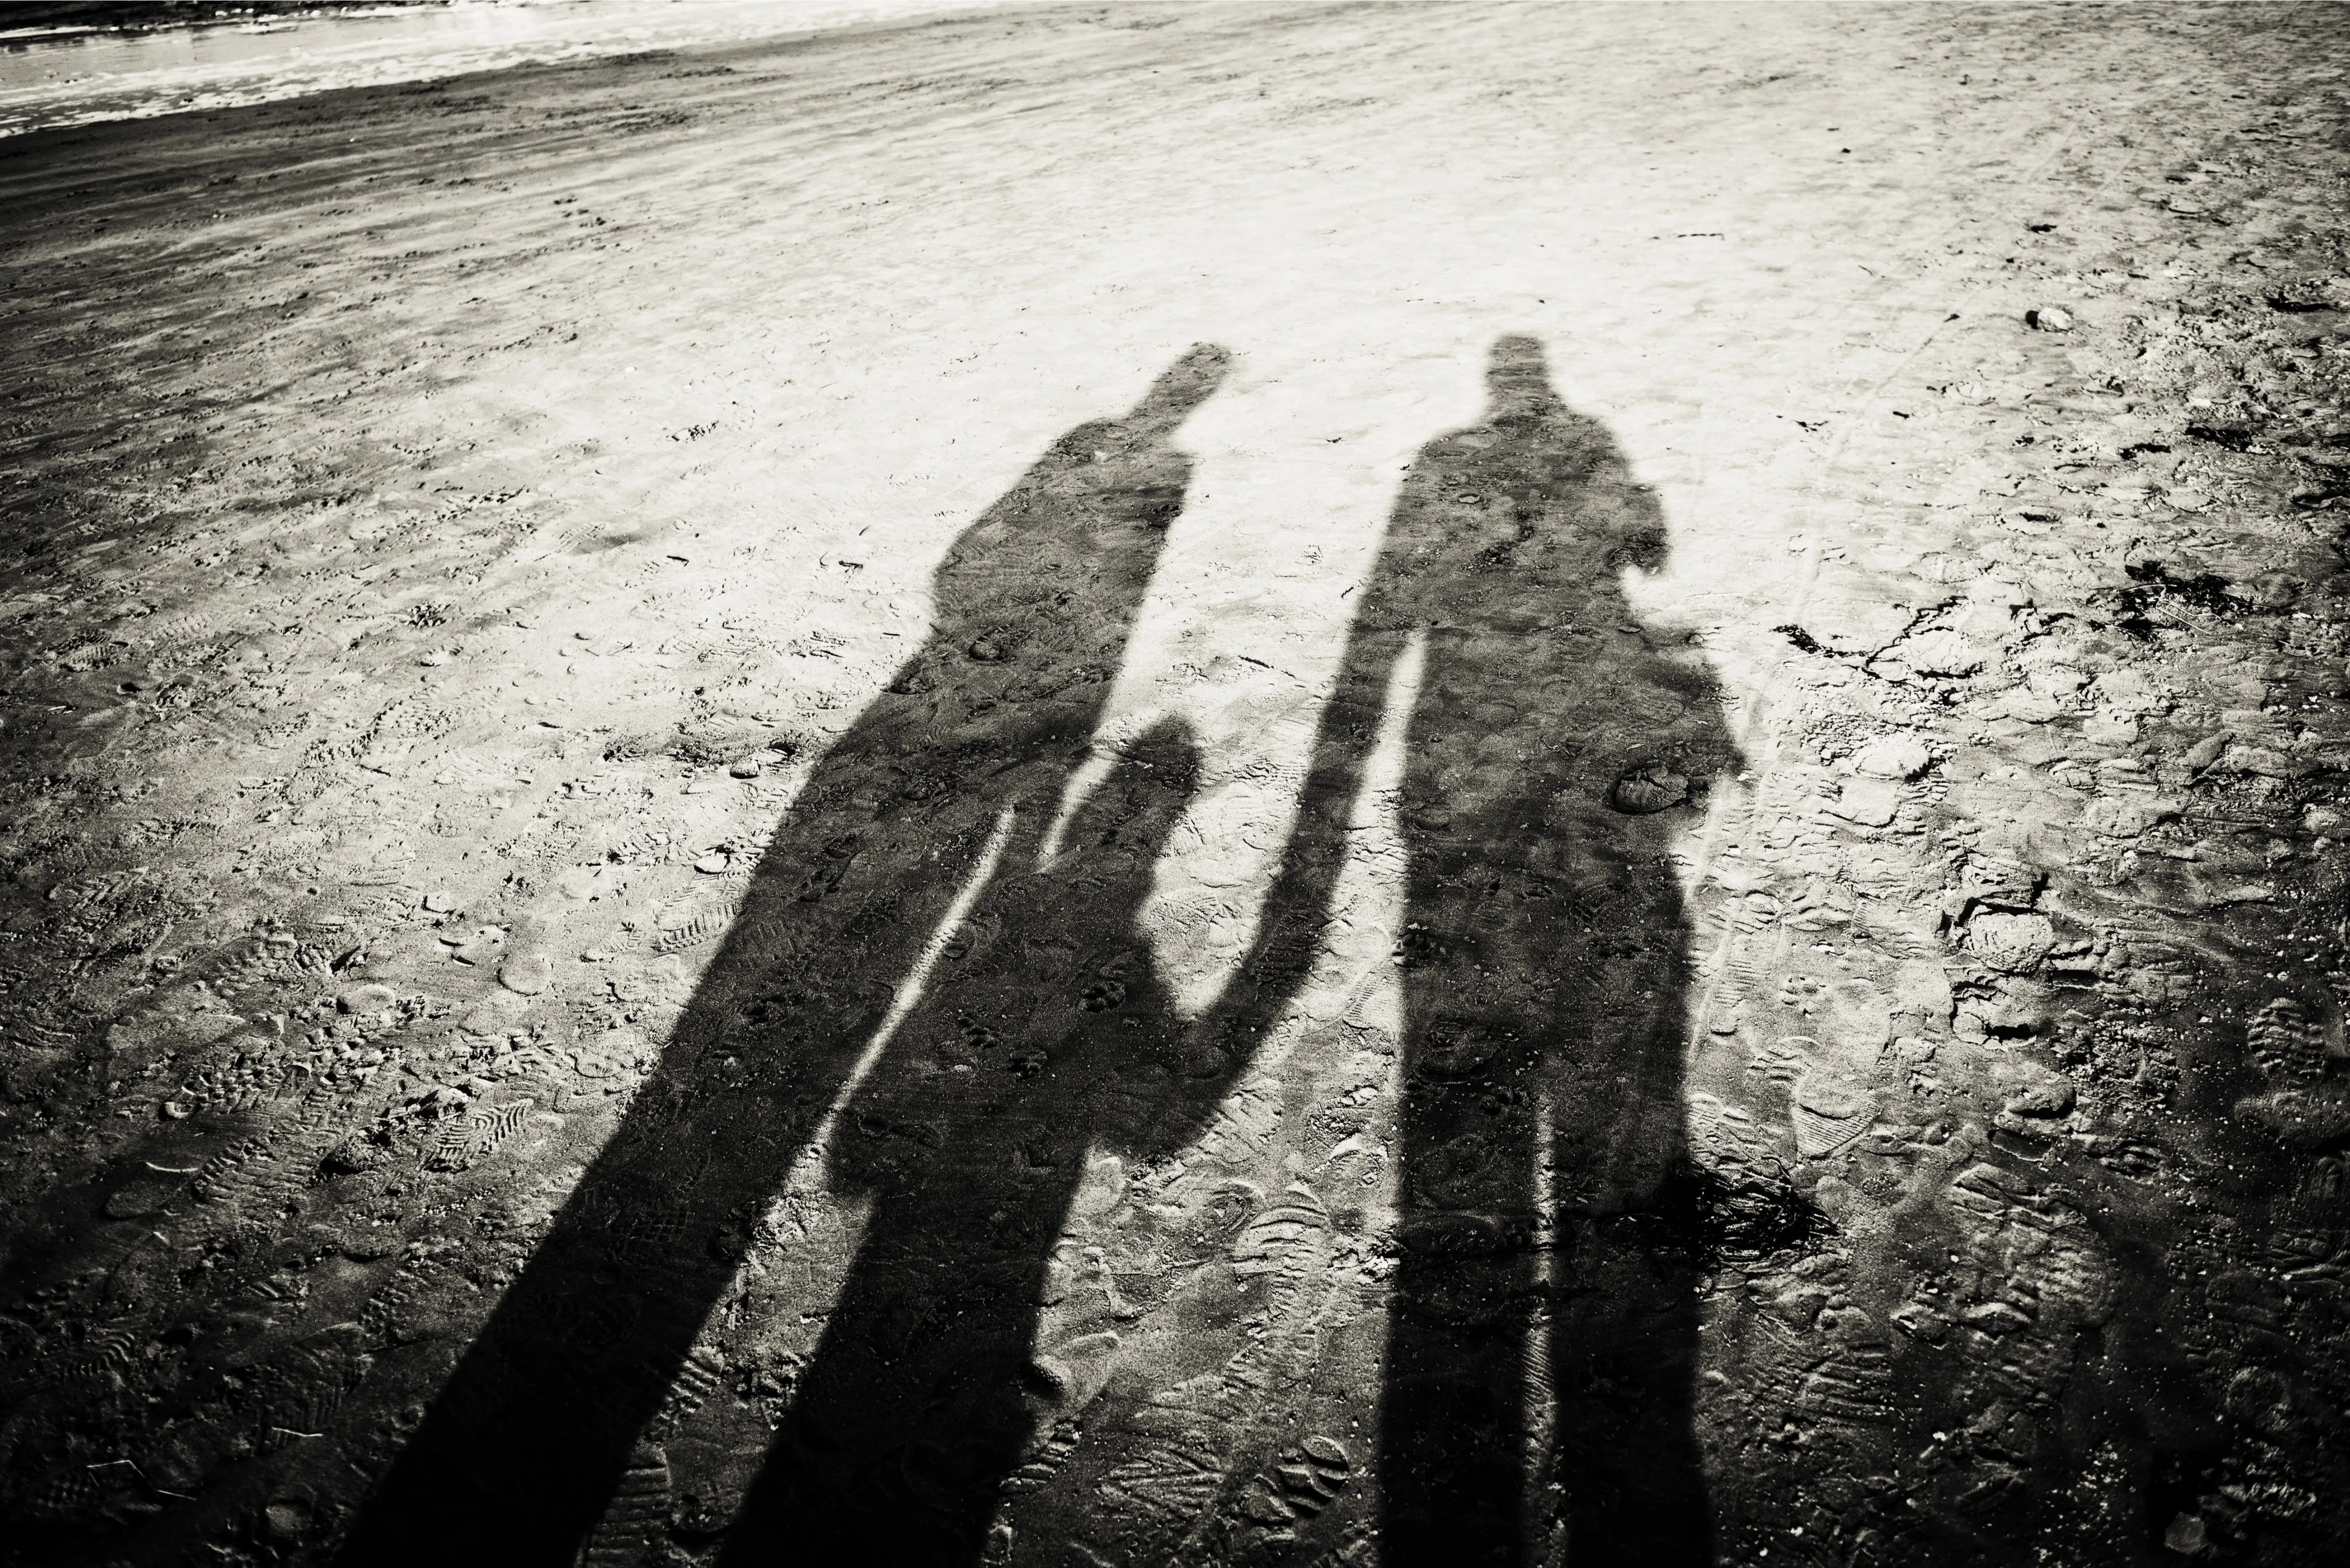 Shadows of family